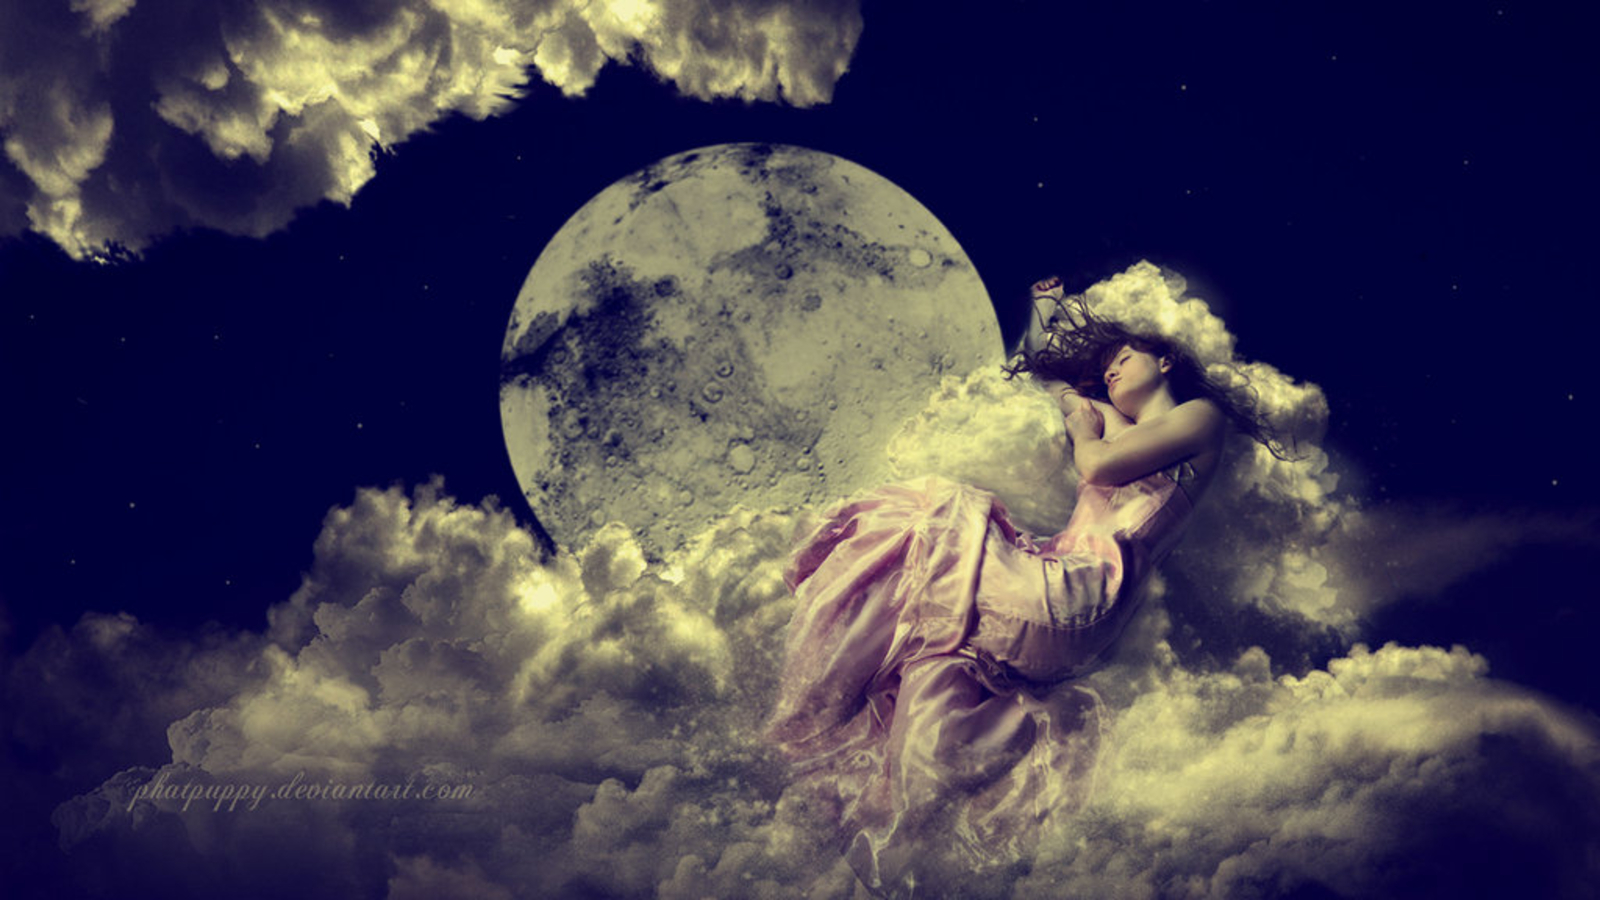 midnight dream - Daydreaming Wallpaper (24120659) - Fanpop